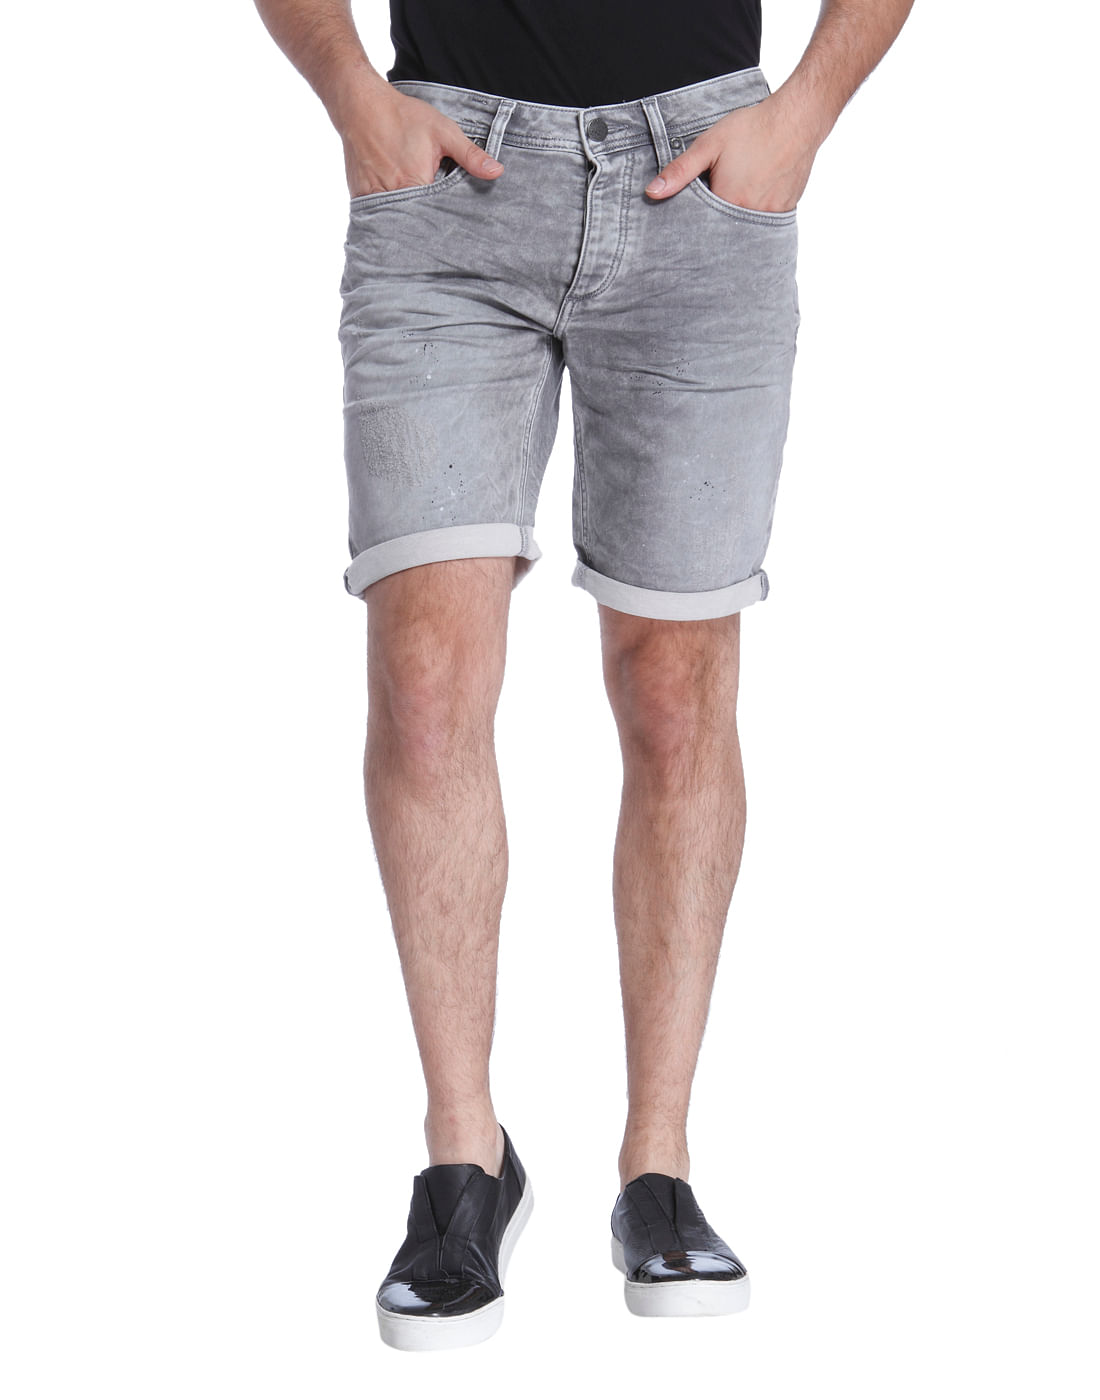 grey distressed shorts